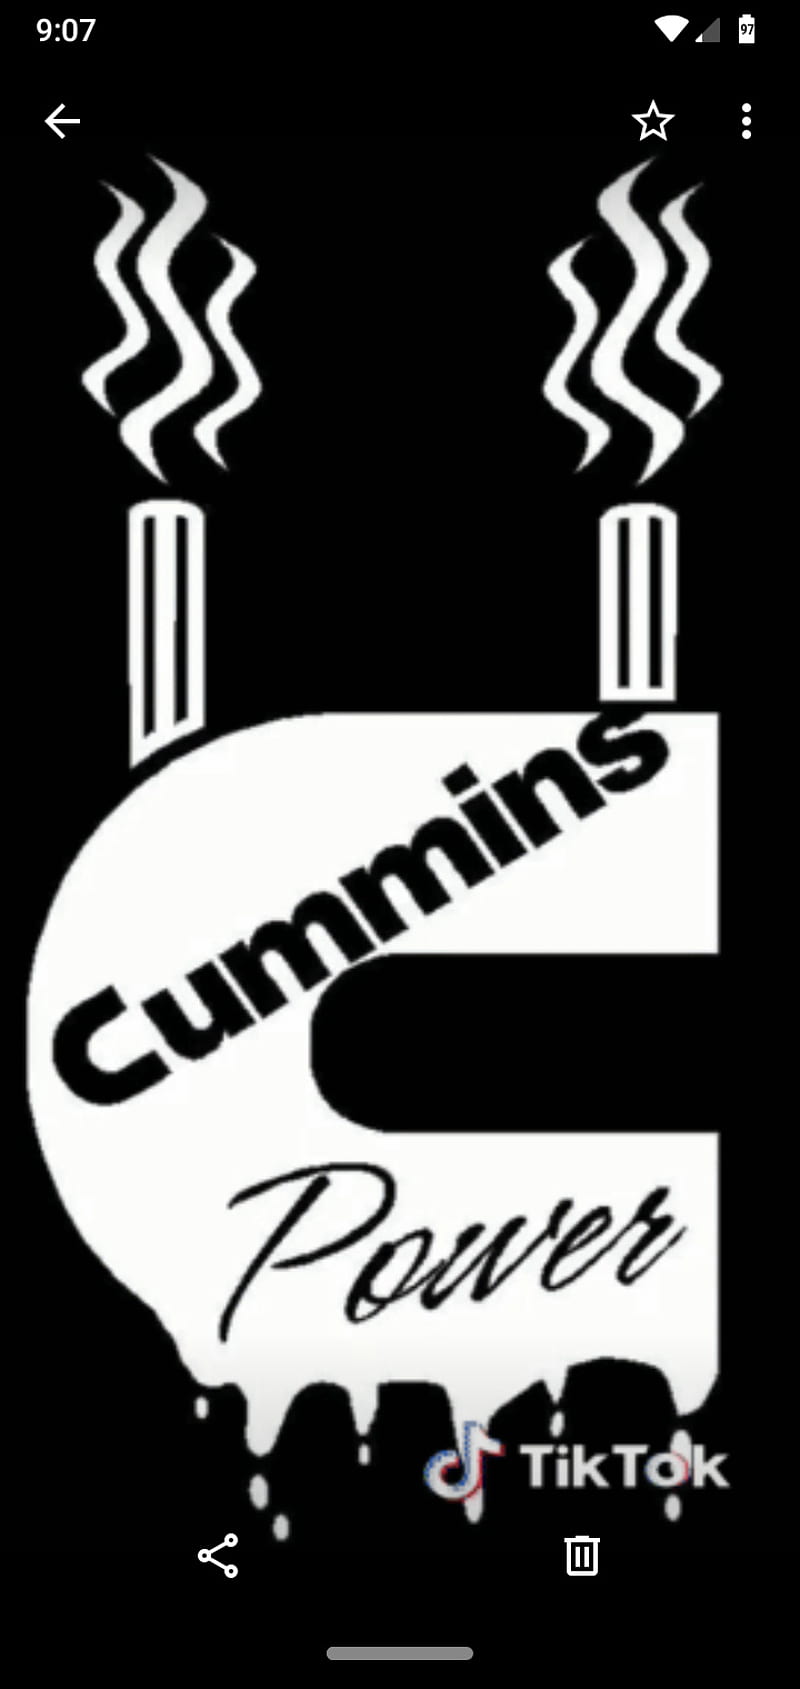 Share 62+ cummins logo wallpaper latest - in.cdgdbentre